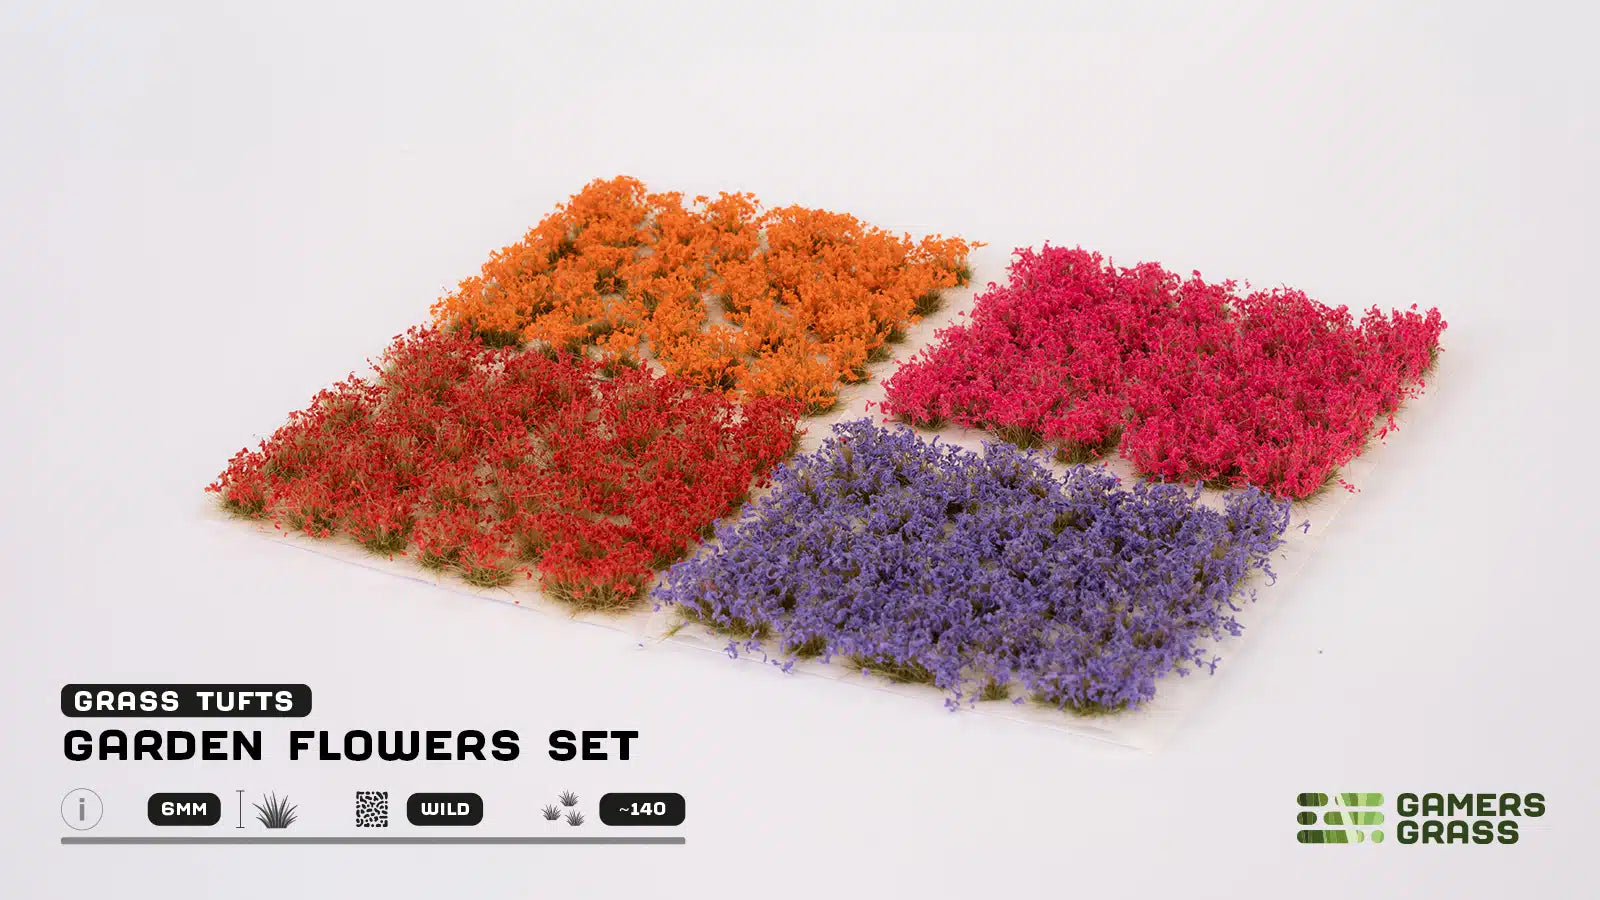 Garden Flowers Set Tufts (Wild) - Gamers Grass